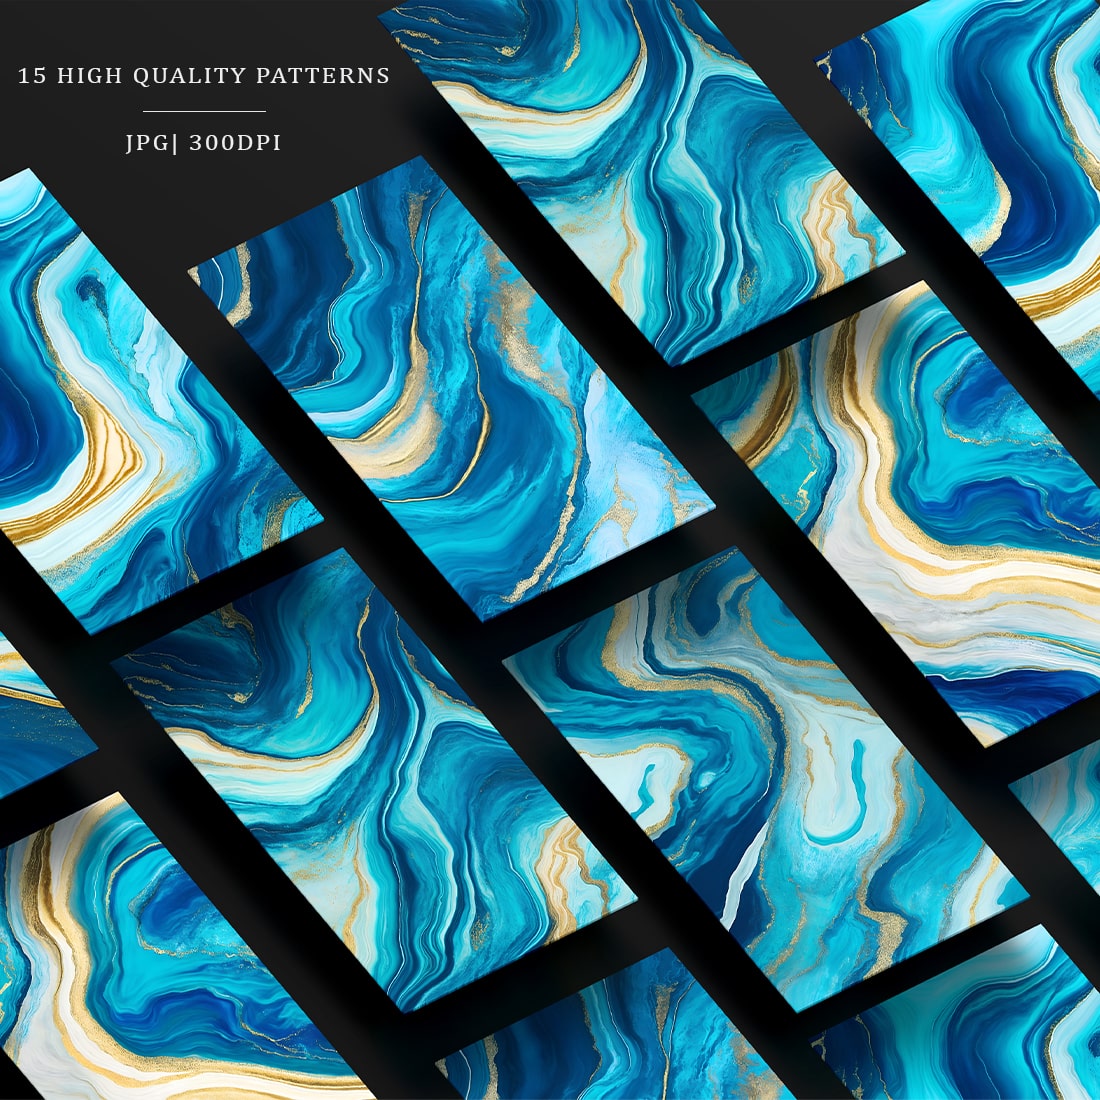 Aqua Blue Marble Textures preview image.